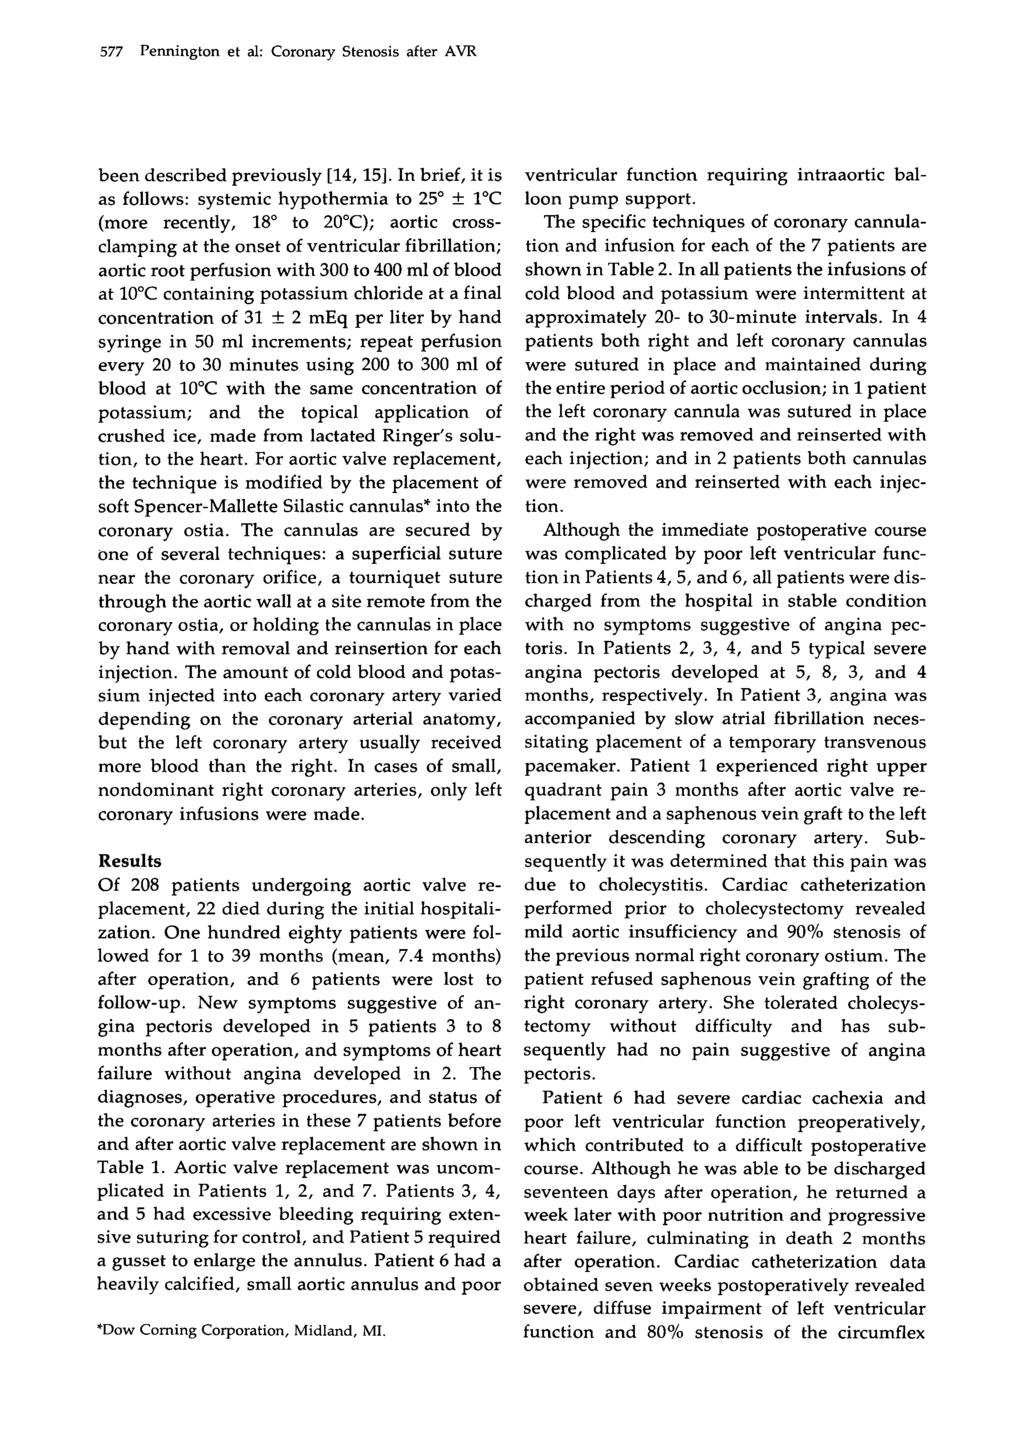 577 Pennington et al: Coronary Stenosis after AVR been described previously [14, 151.